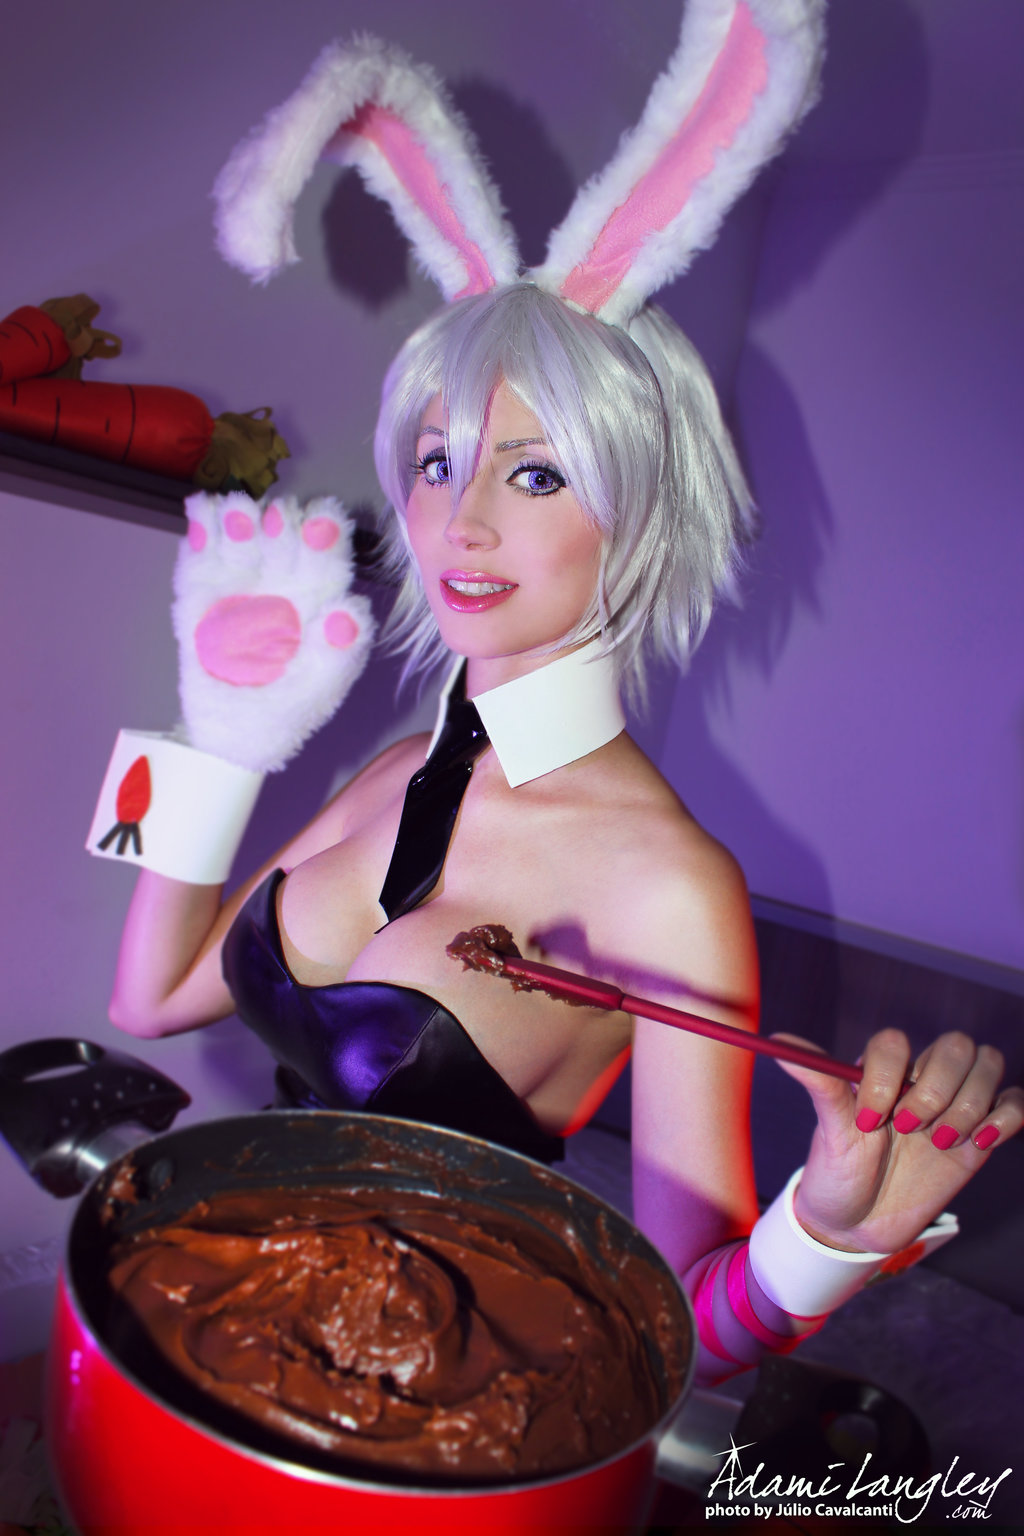 riven_battle_bunny_cosplay___happy_easter_by_adami_langley-d8u6mkj